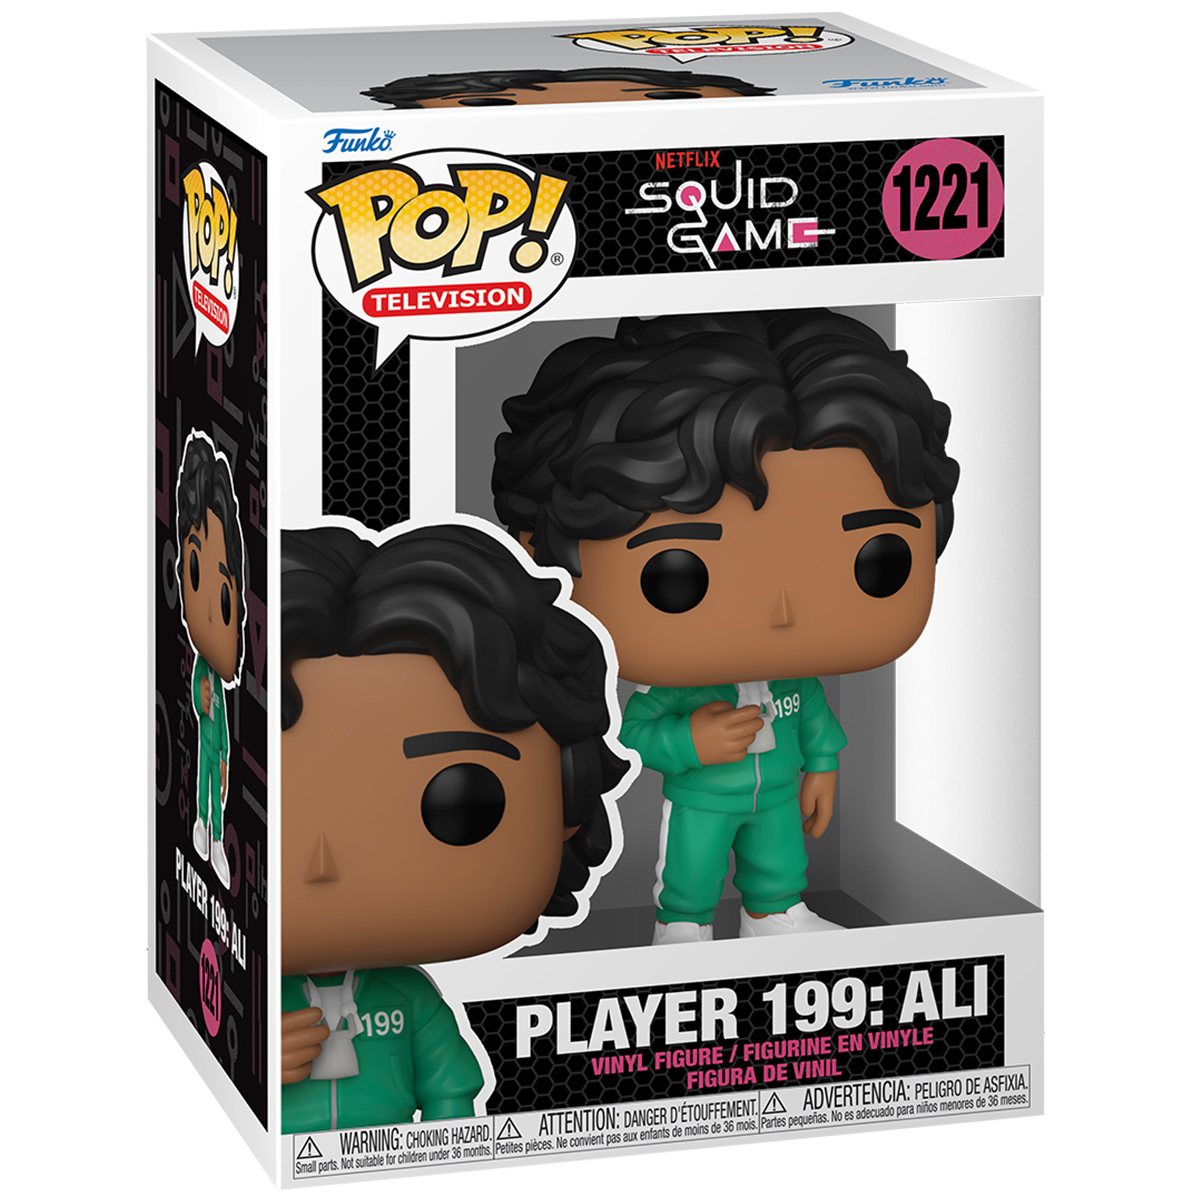 Player 199: Ali #1221 - Squid Game - Funko Pop! Television